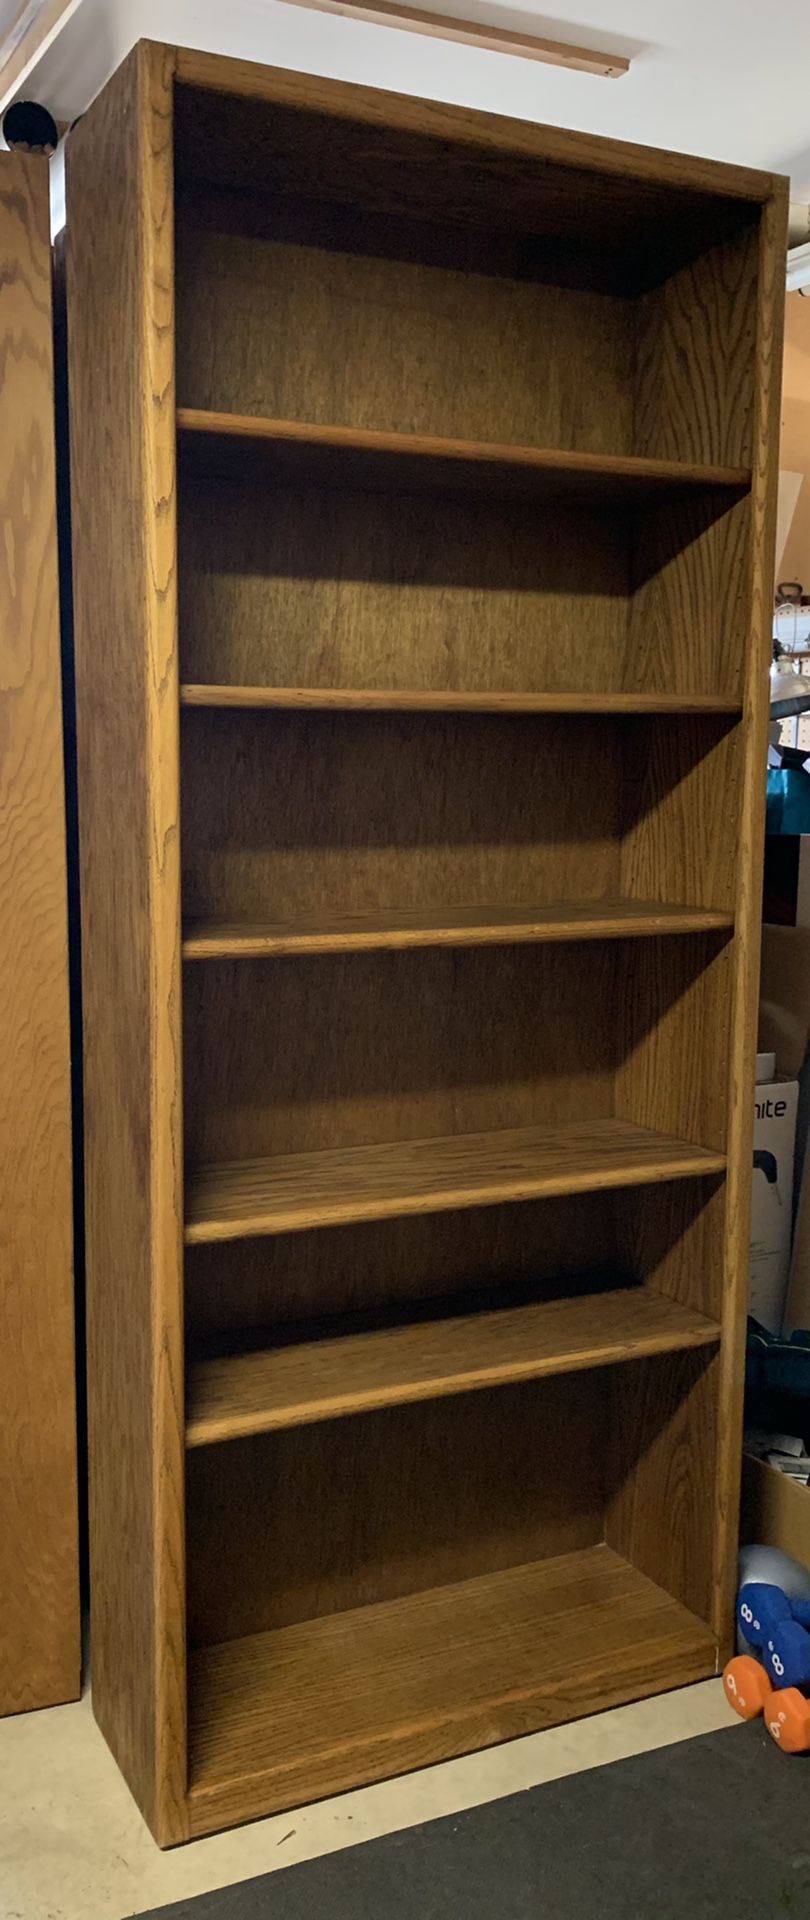 Oak Book Cases with Adjustable Shelves